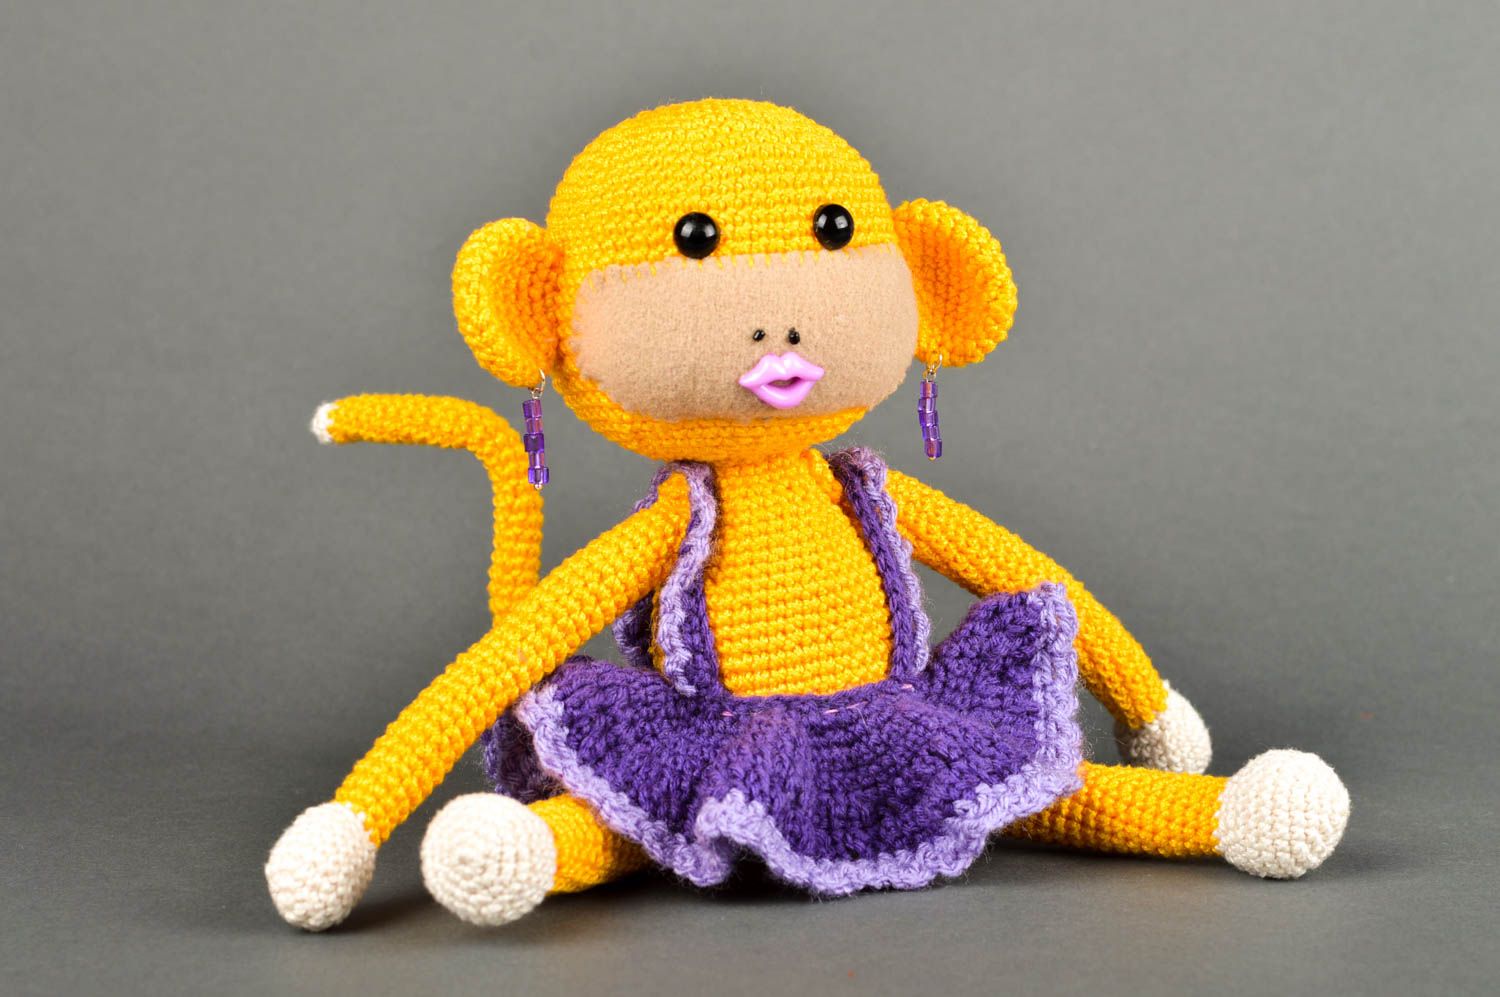 Handmade crocheted toys creative toys for children designer toys nursery decor photo 2